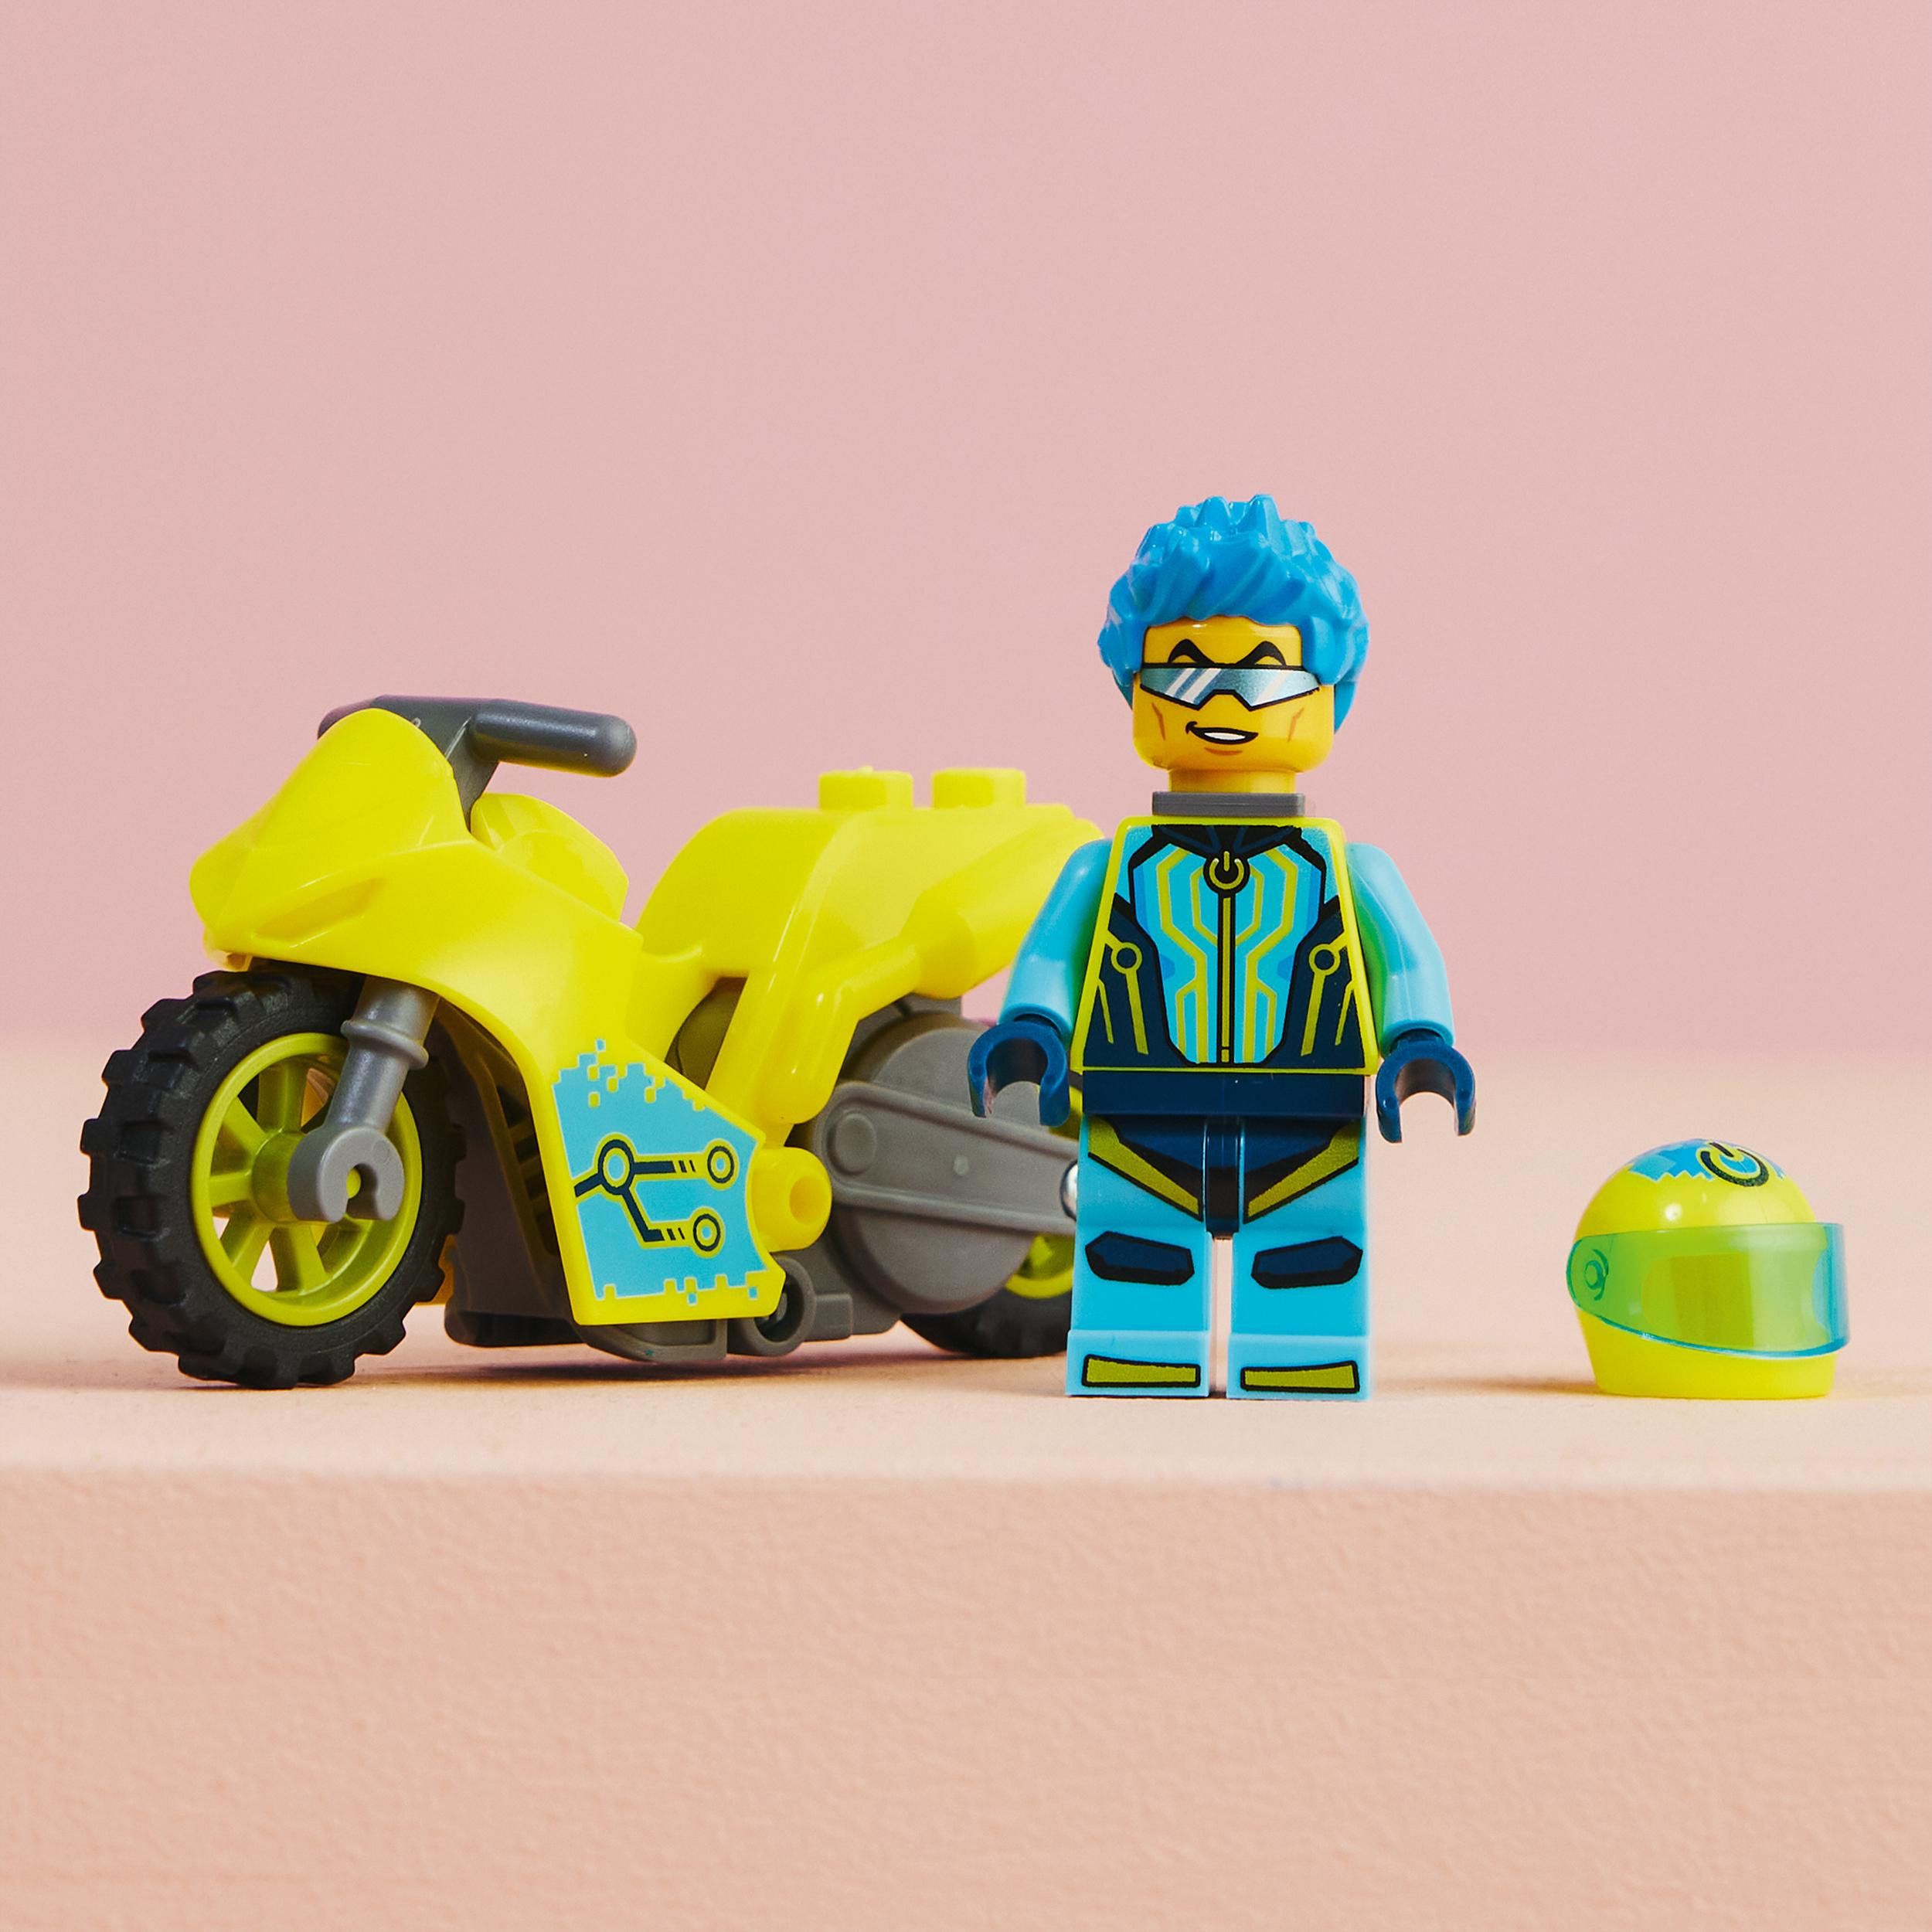 LEGO City 60358 Cyber-Stuntbike Bausatz, Mehrfarbig